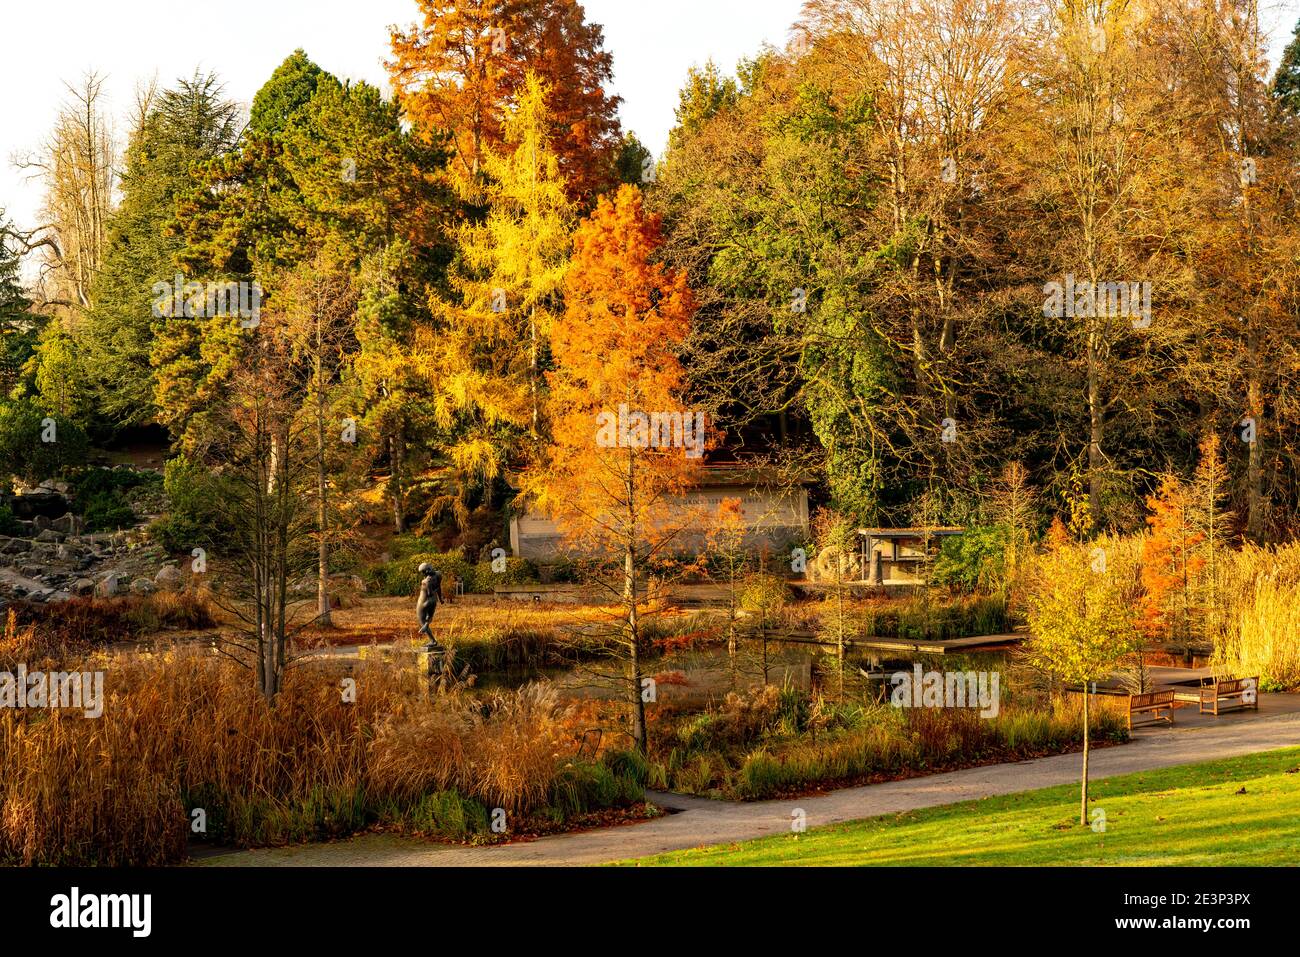 The Grugapark, Essen, Botanical Garden, park for leisure and recreation, at the Waldsee, artwork Big Bathers, autumn, Essen, NRW, Germany, Stock Photo